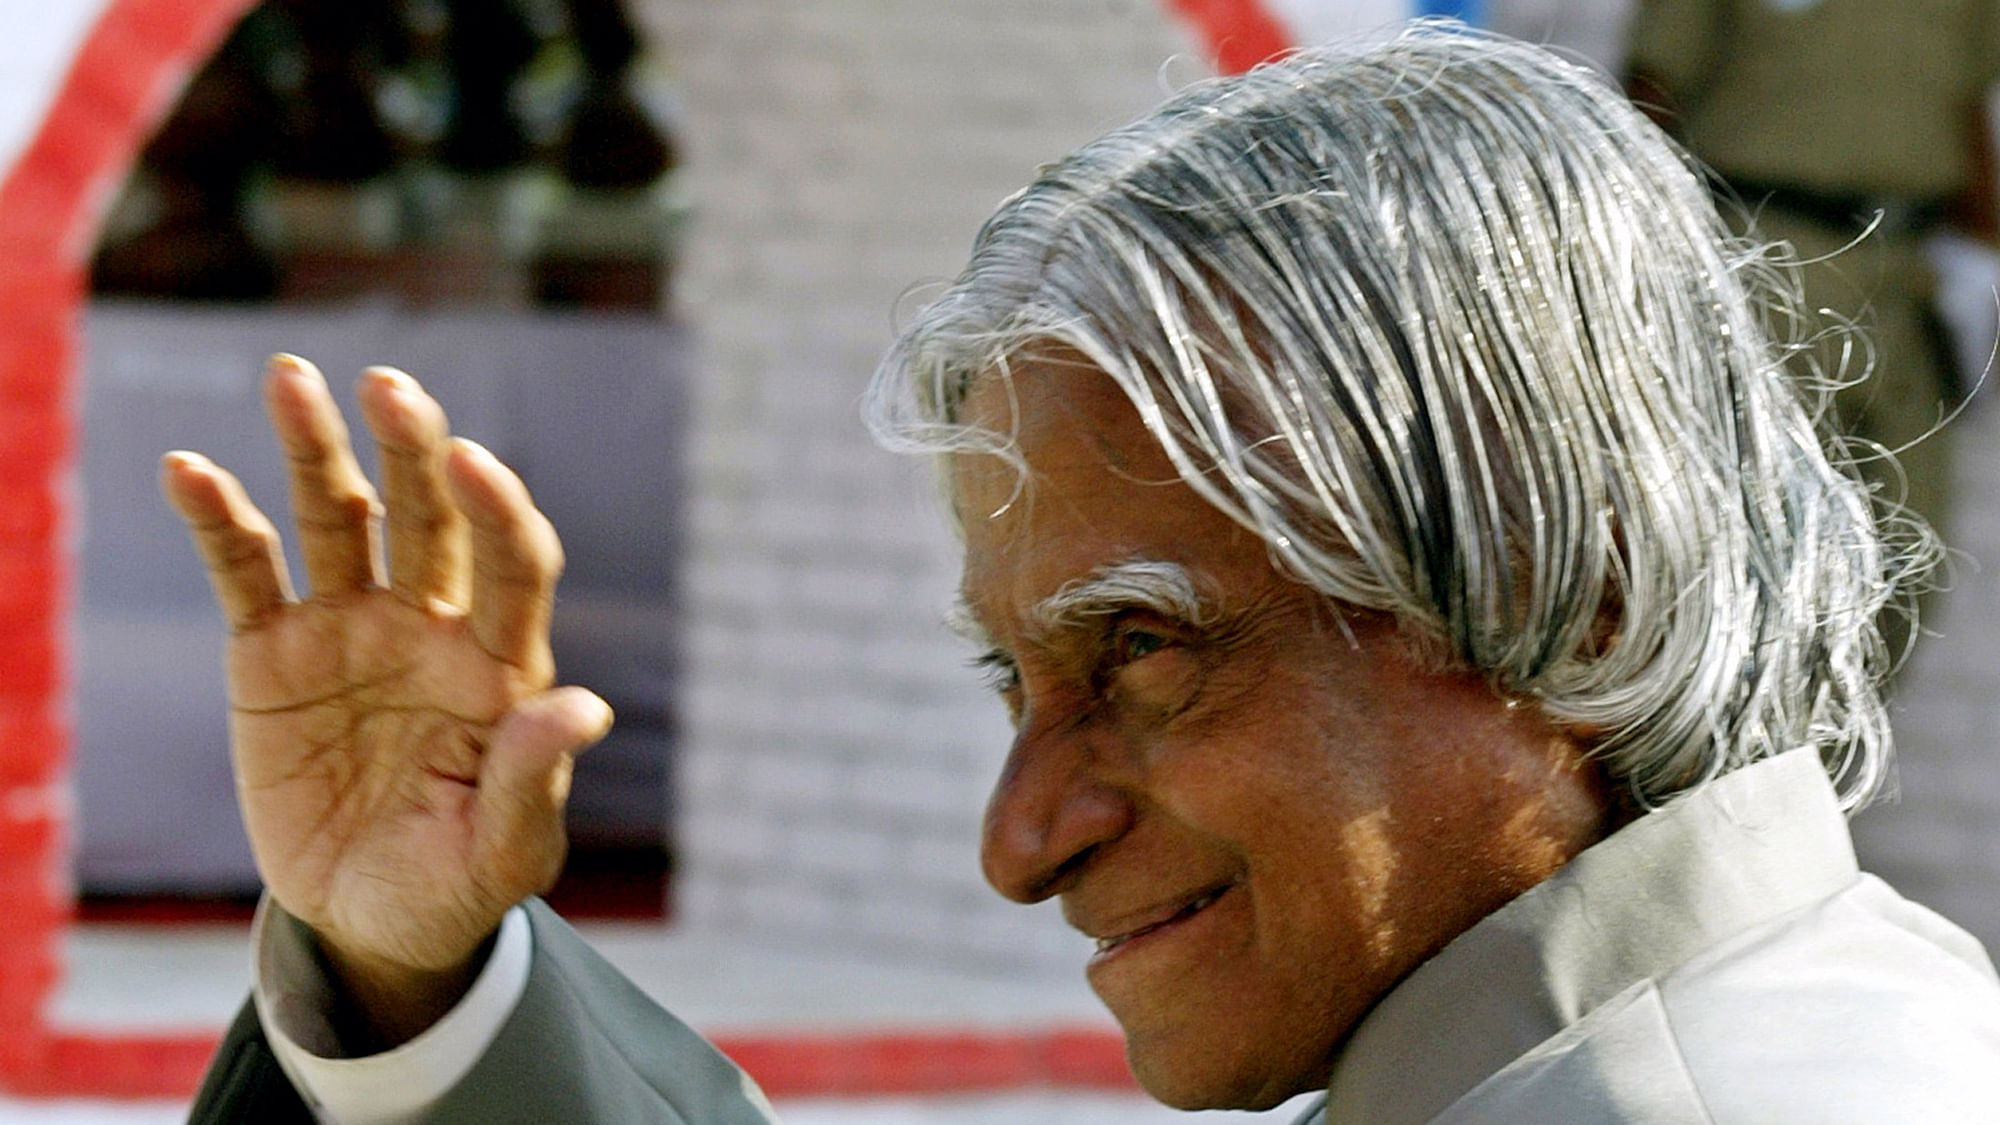 Dr APJ Abdul Kalam, former President of India. (Photo: Reuters)